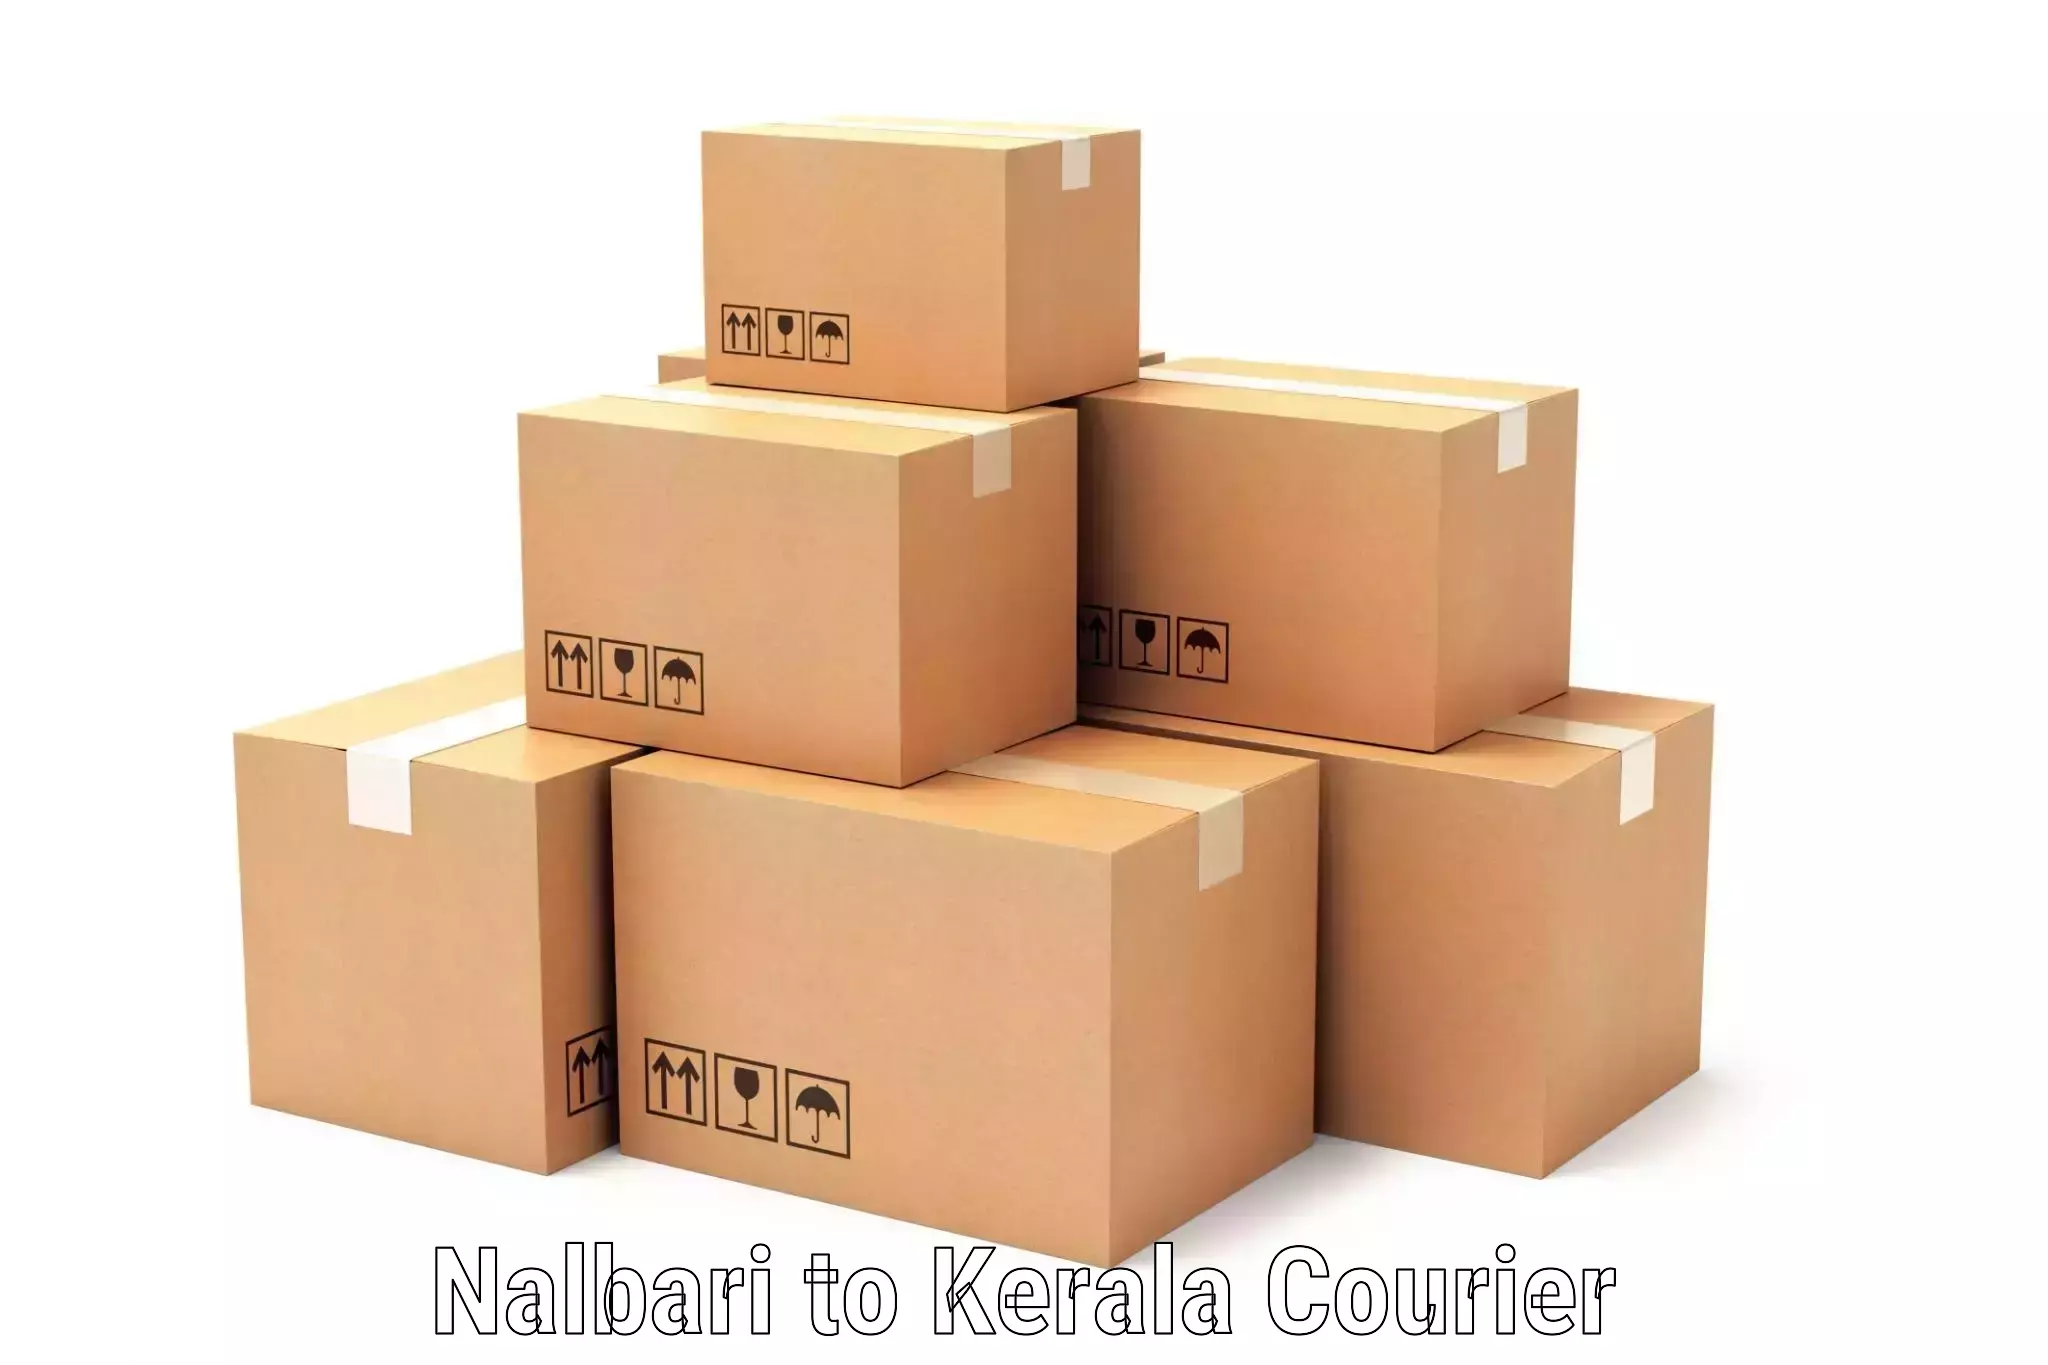 Efficient freight service Nalbari to Kollam